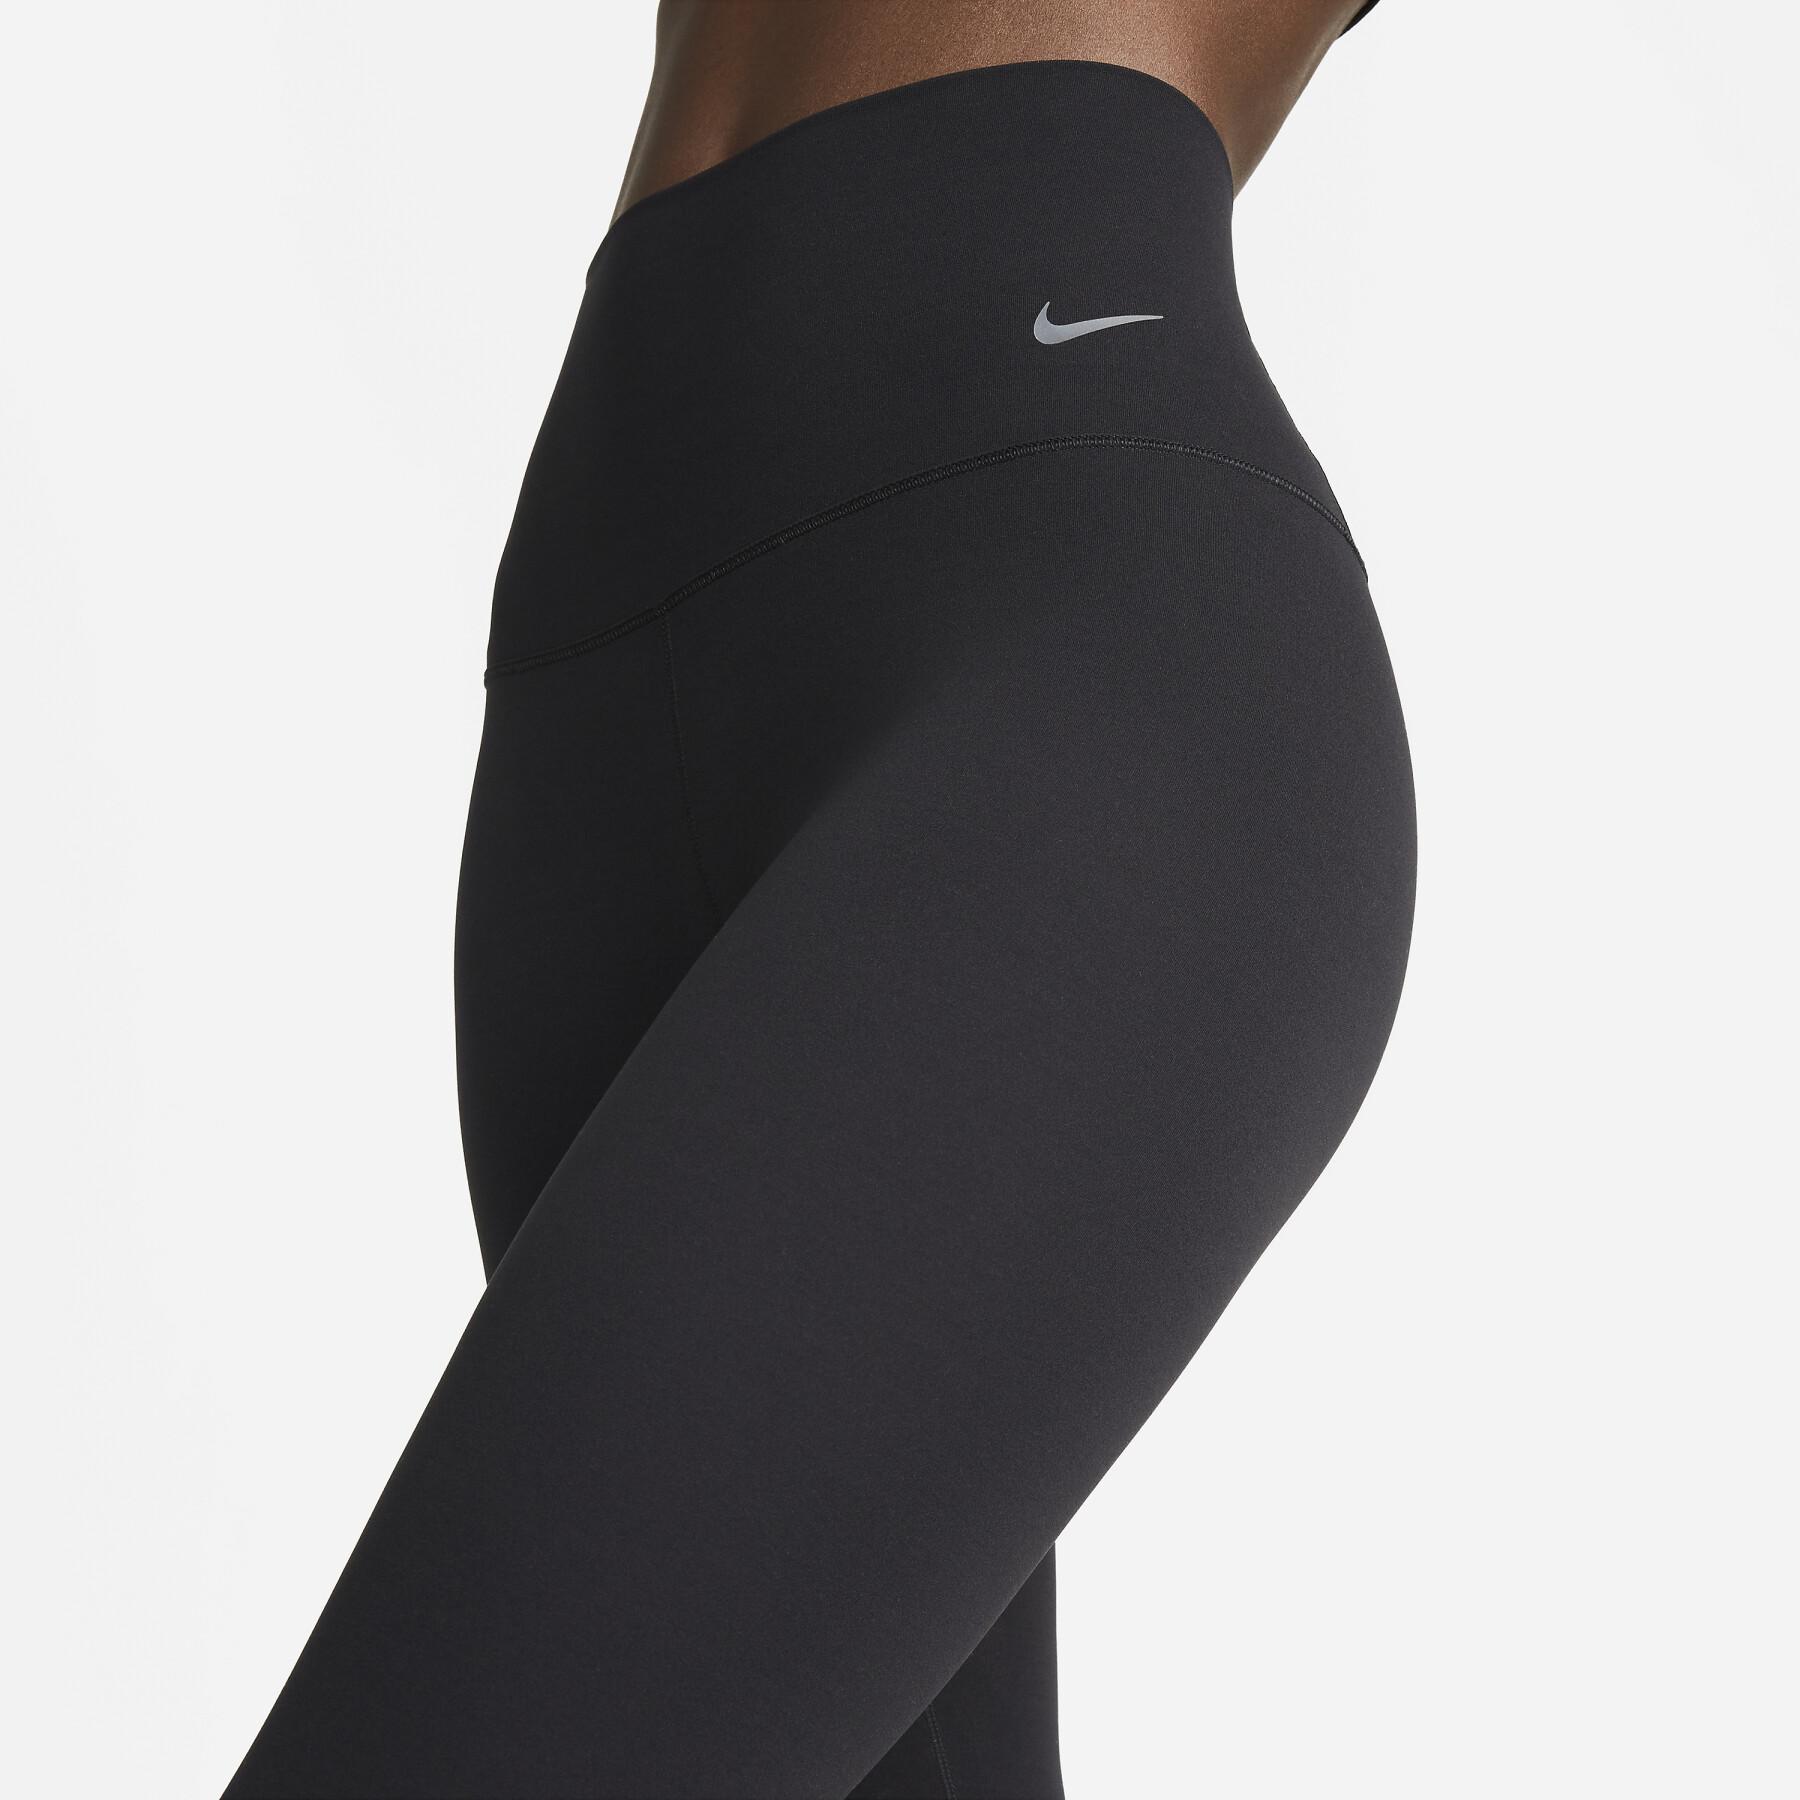 Legging 7/8 mujer Nike Dri-Fit Zenvy HR